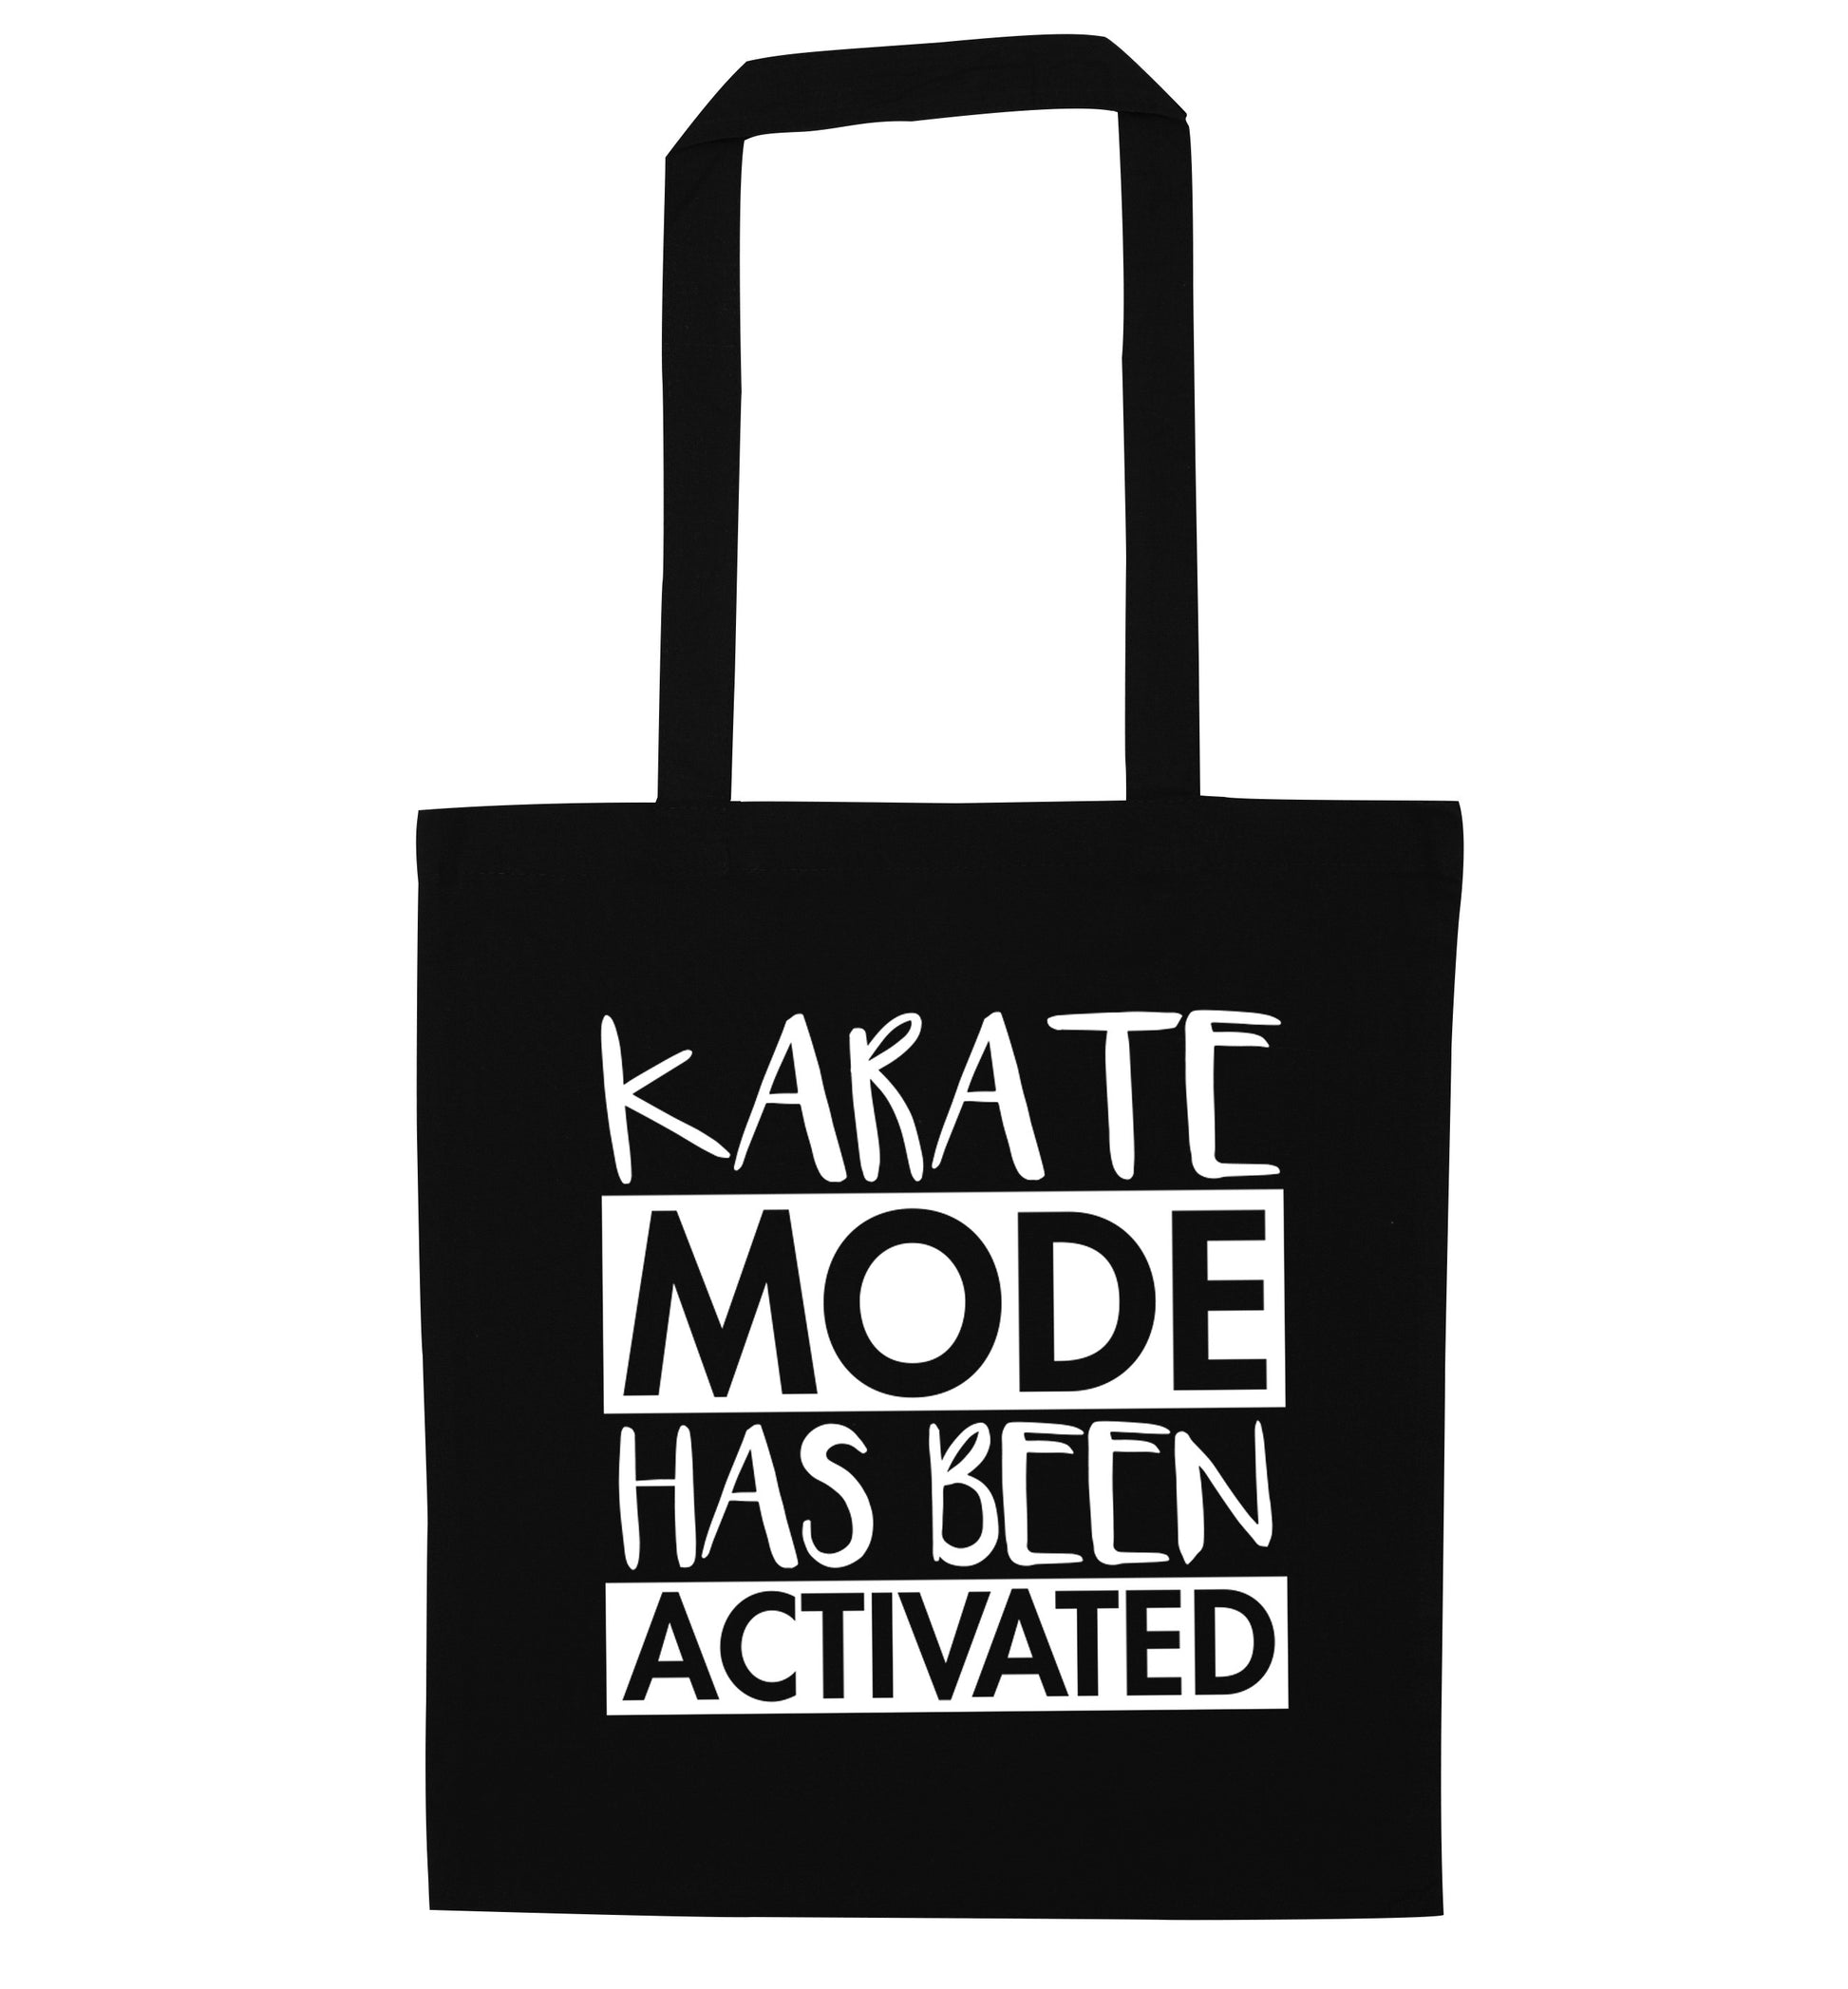 Karate mode activated black tote bag